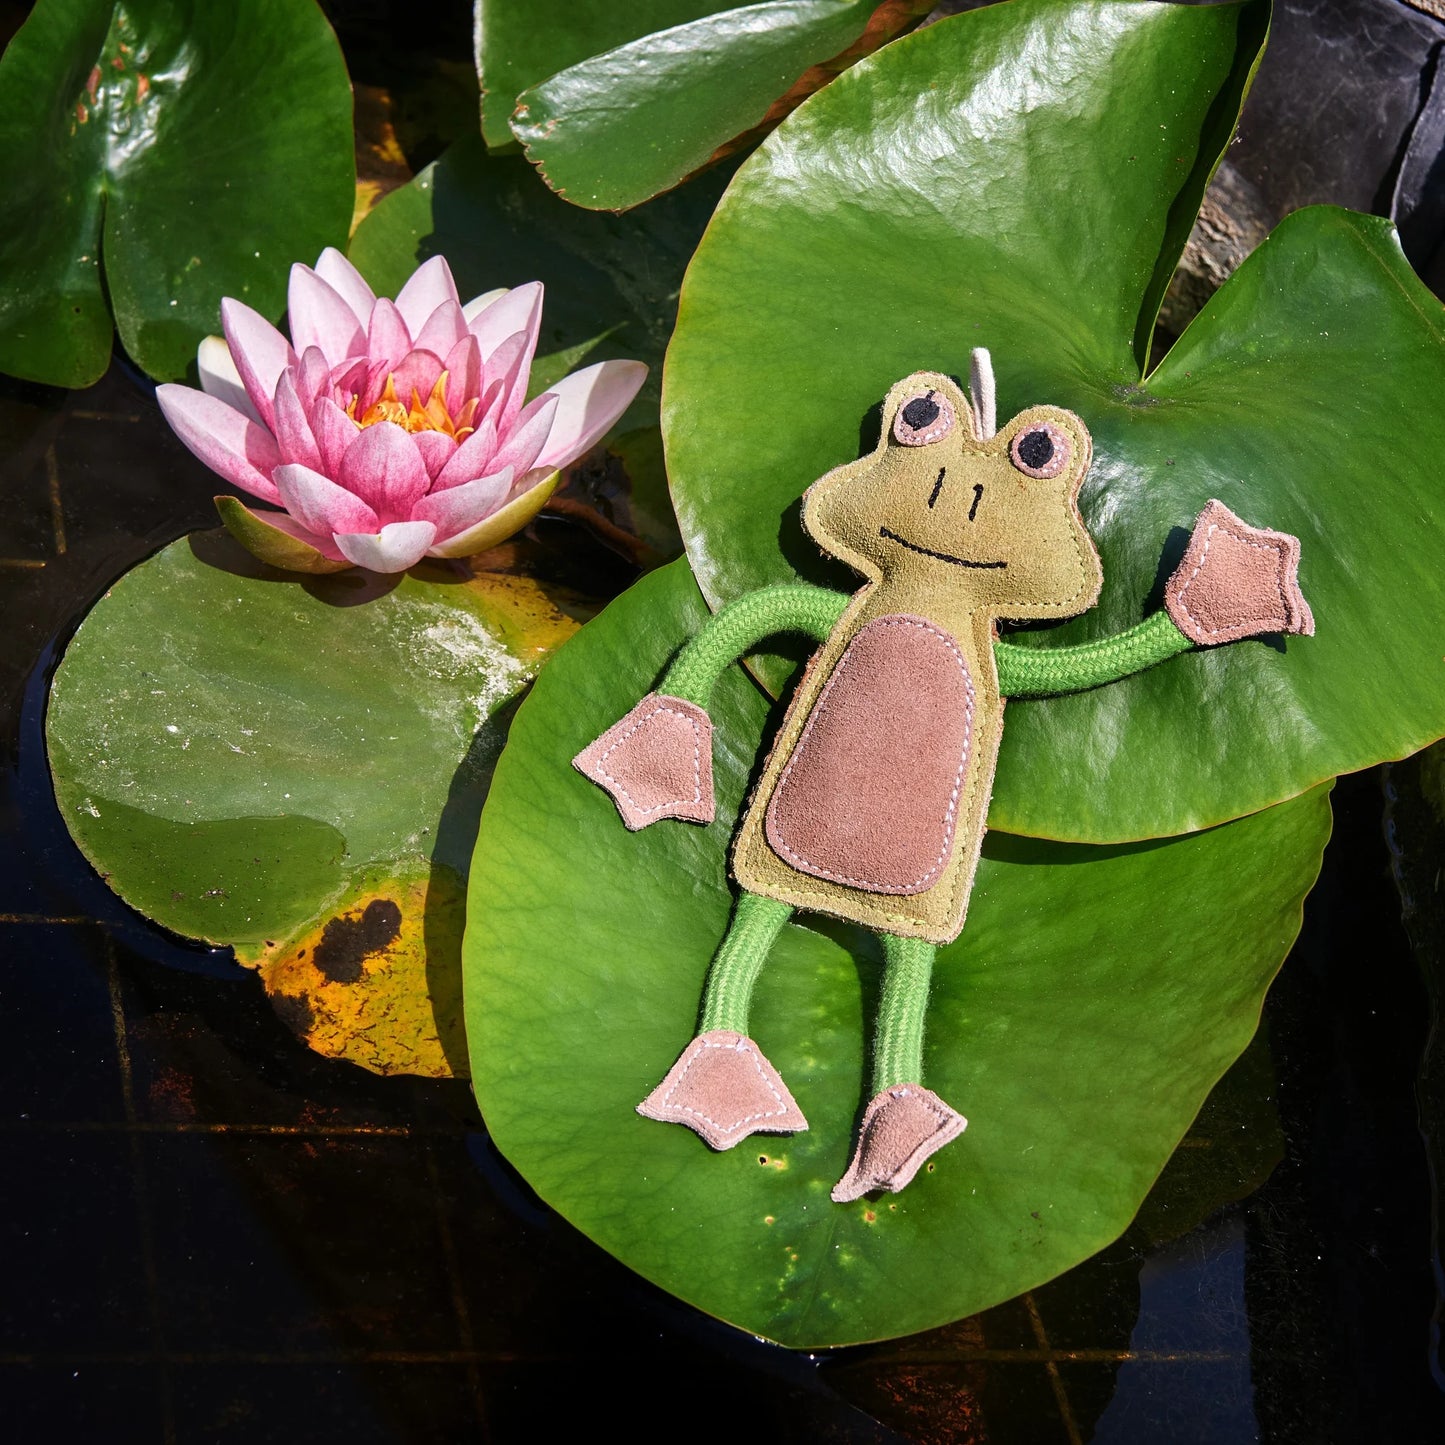 Francois Le Frog, Eco Toy